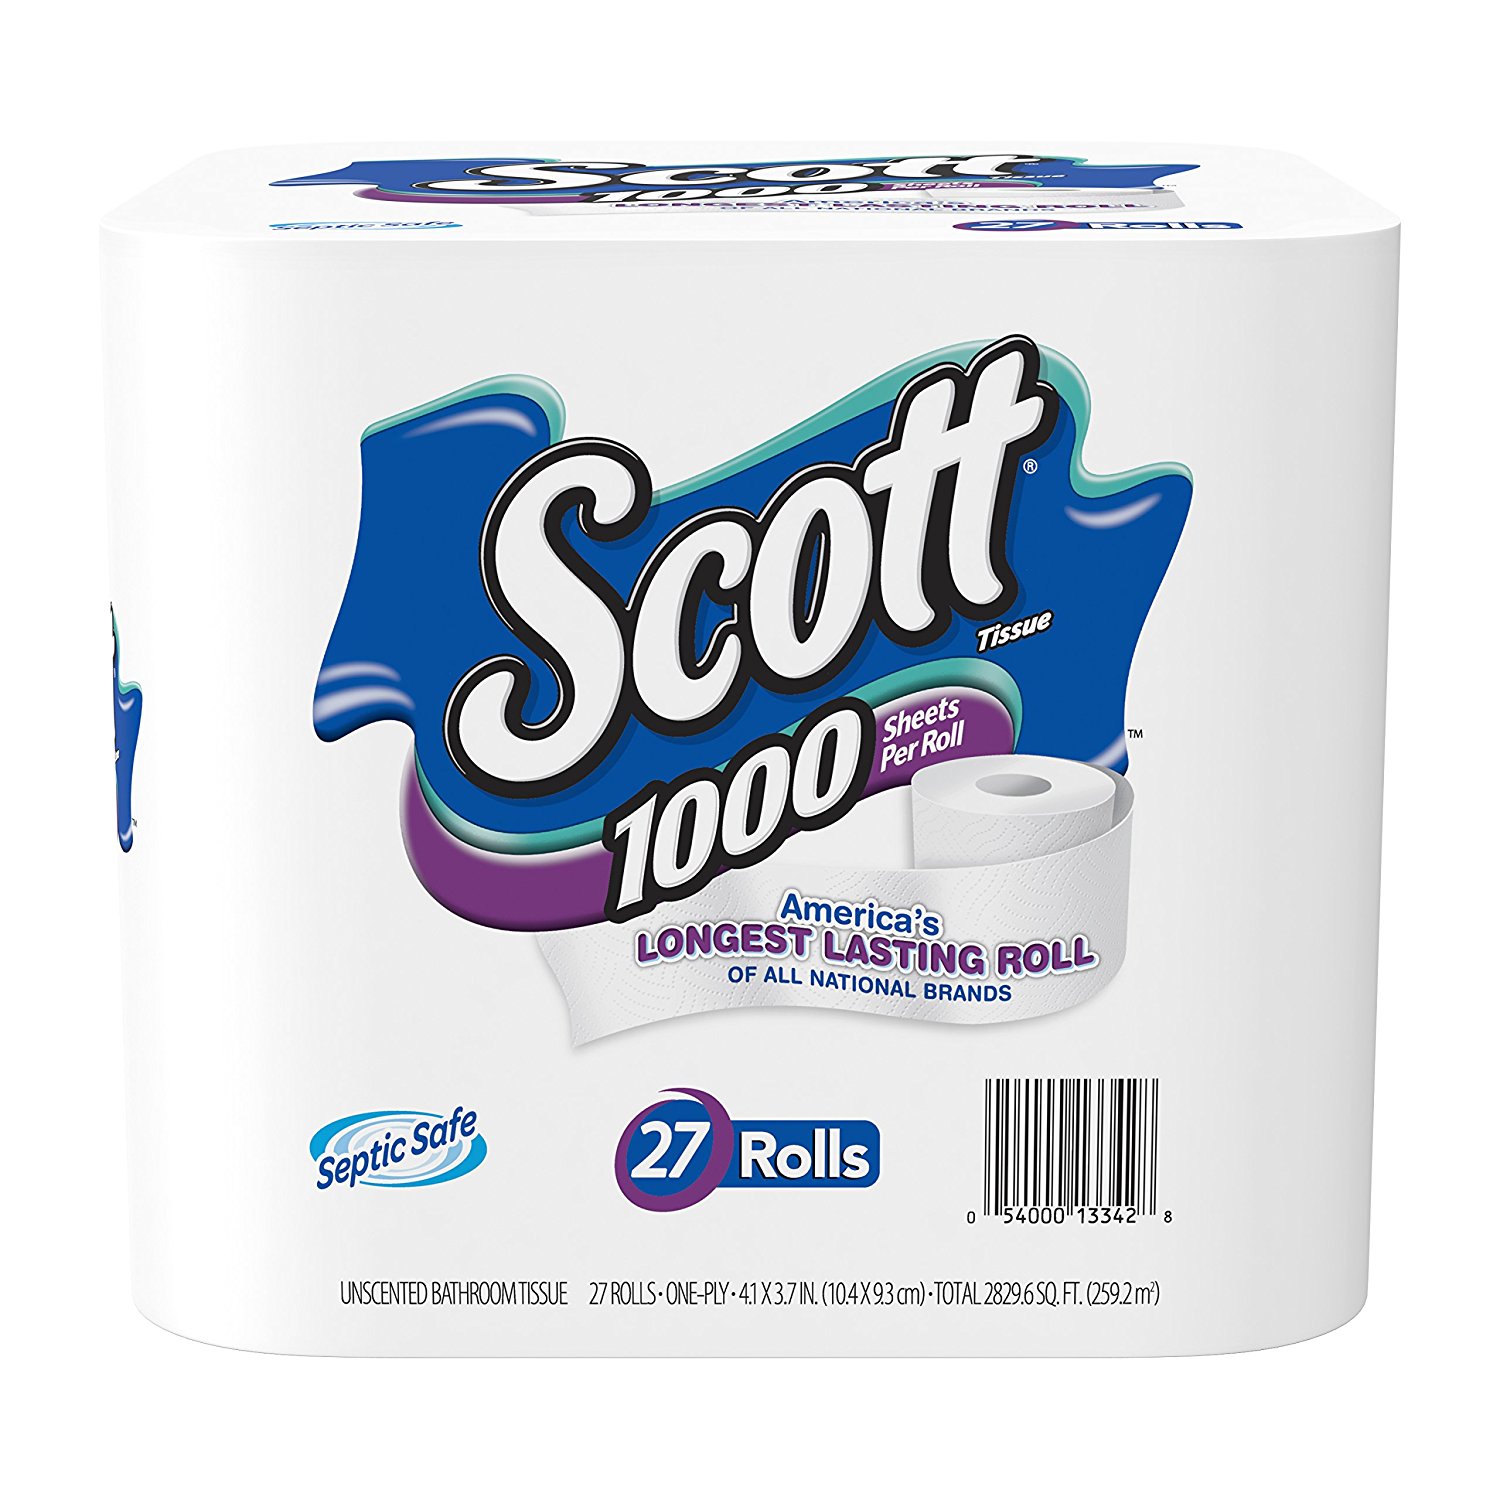 Scott 1000 Sheets Per Roll Toilet Paper, 27 Rolls, Bath Tissue